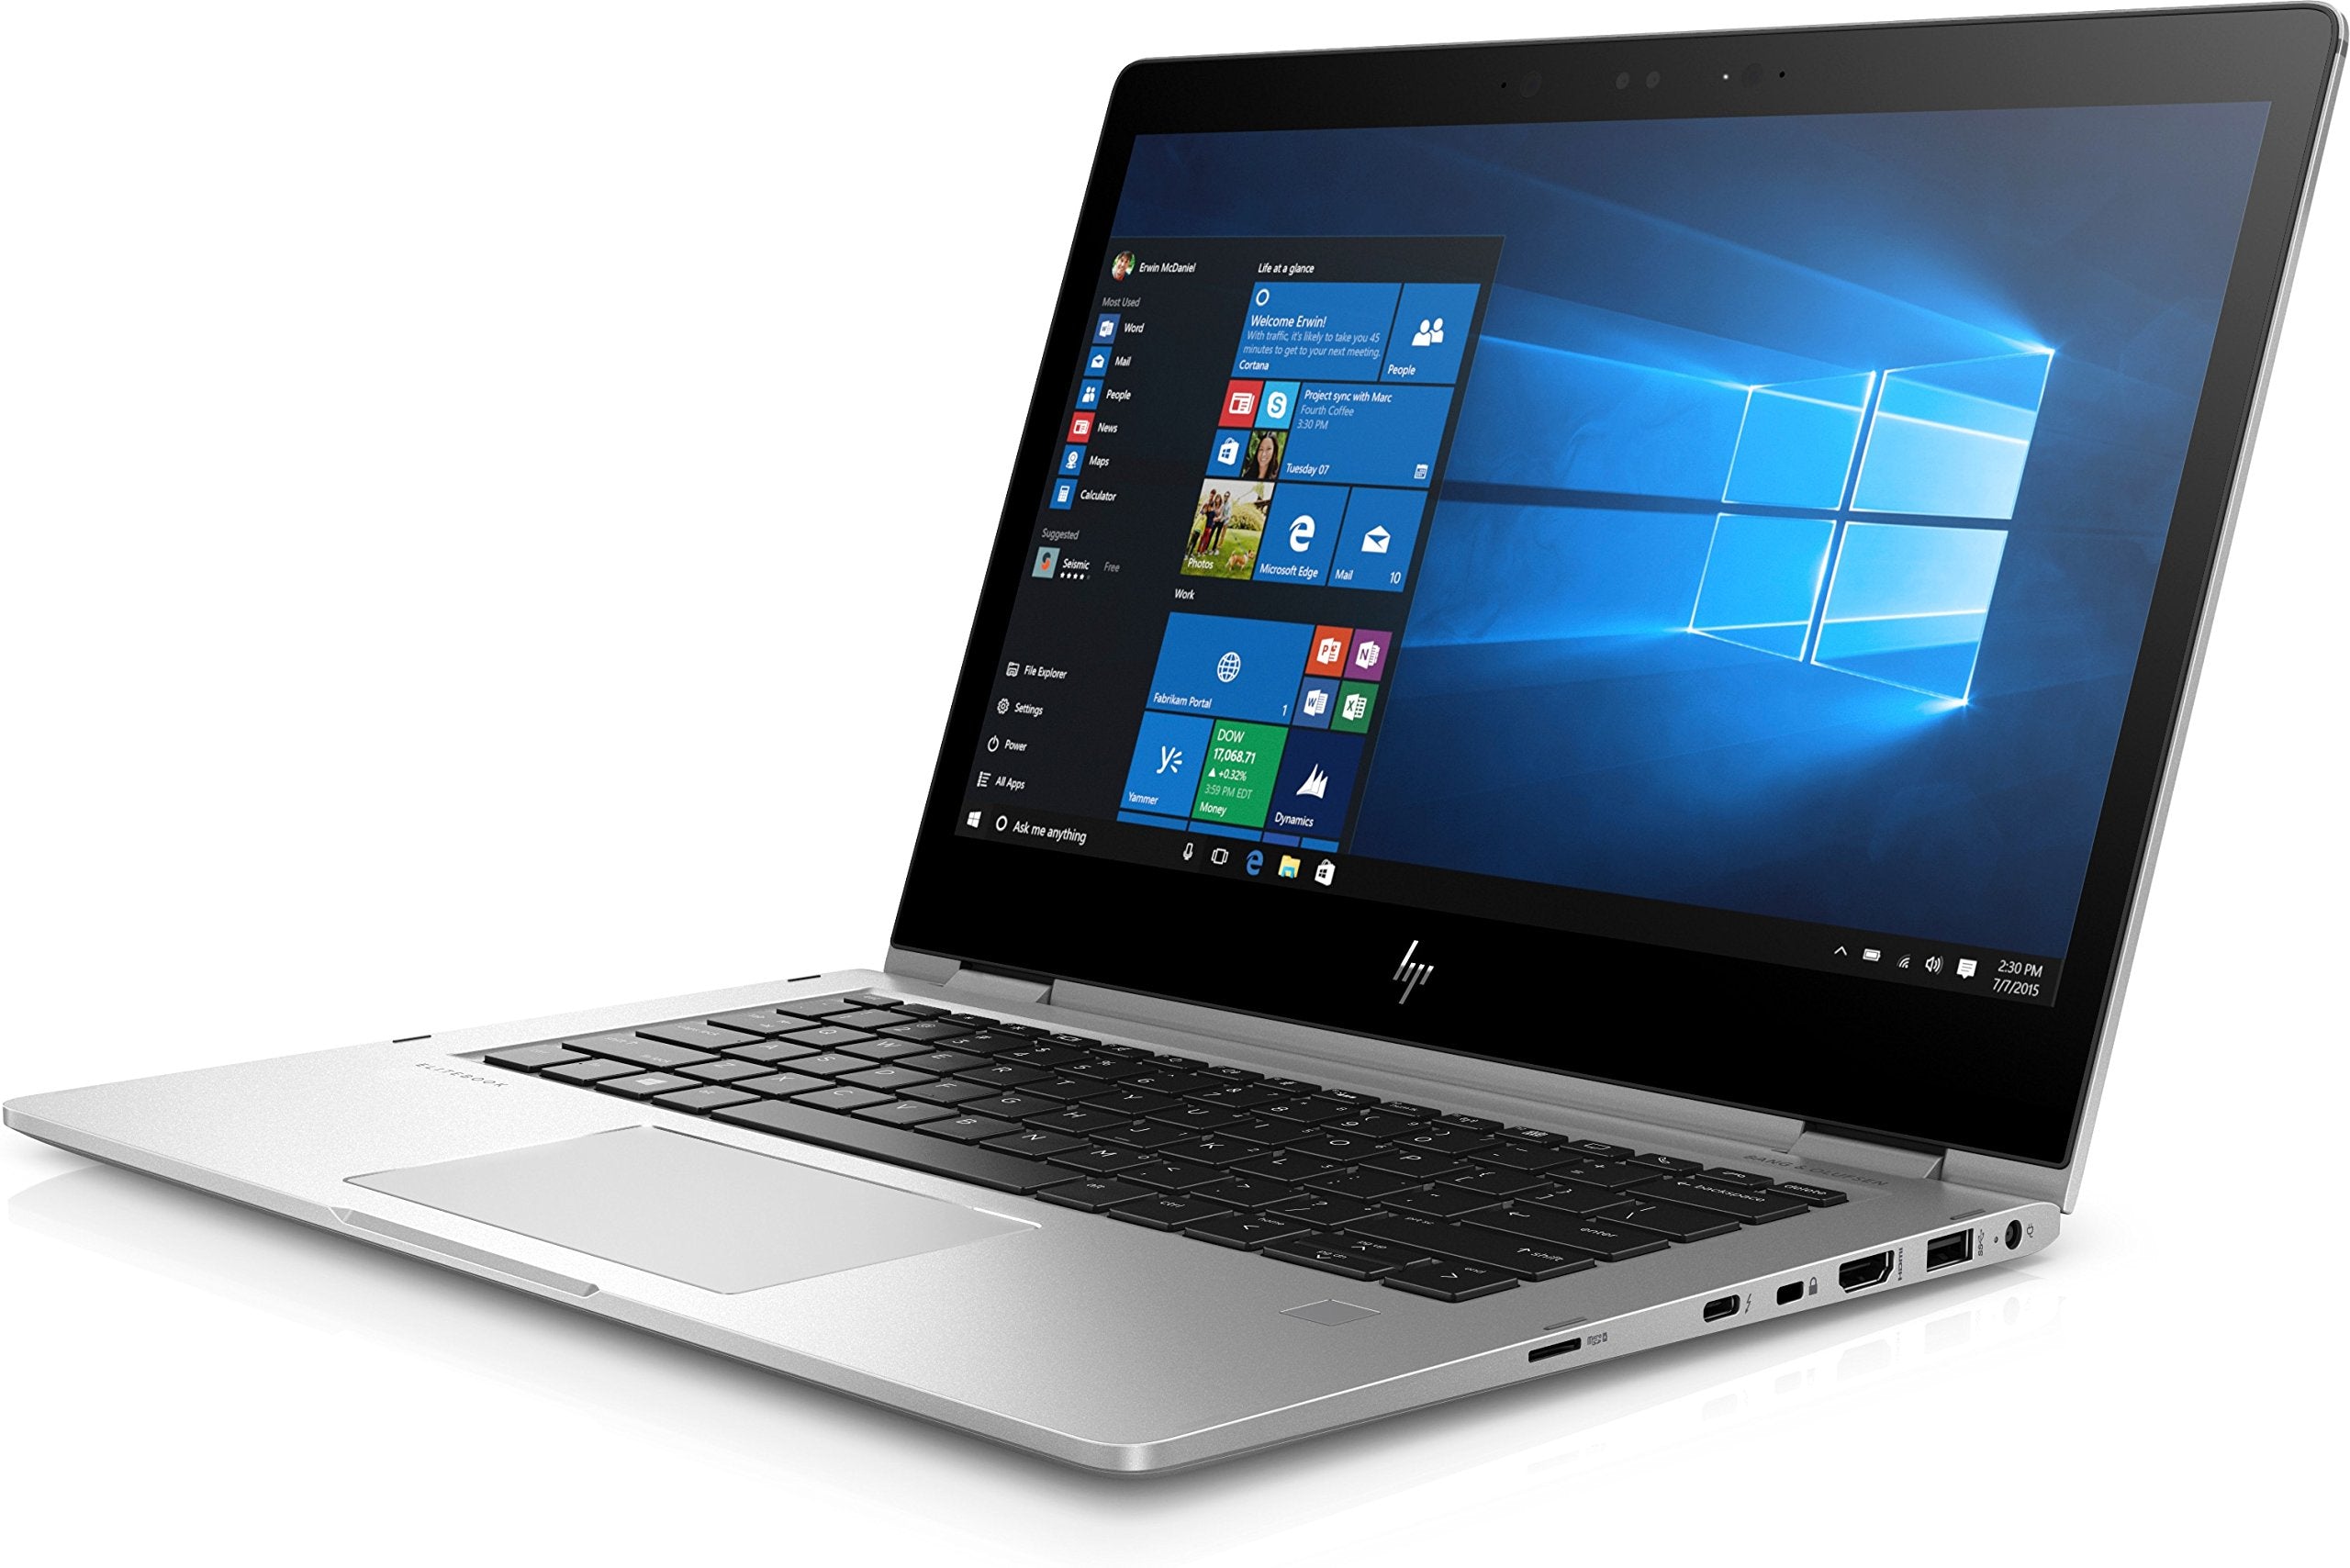 HP EliteBook x360 1030 G2, 2-in-1 Touchscreen Laptop – i7-7500U, 8GB DDR4, 1TB NVMe, Intel HD Graphics 620, Fingerprint & Smart Card Reader, WIFI 5 & BT 4.2, Backlit Keys, Windows 10 Pro